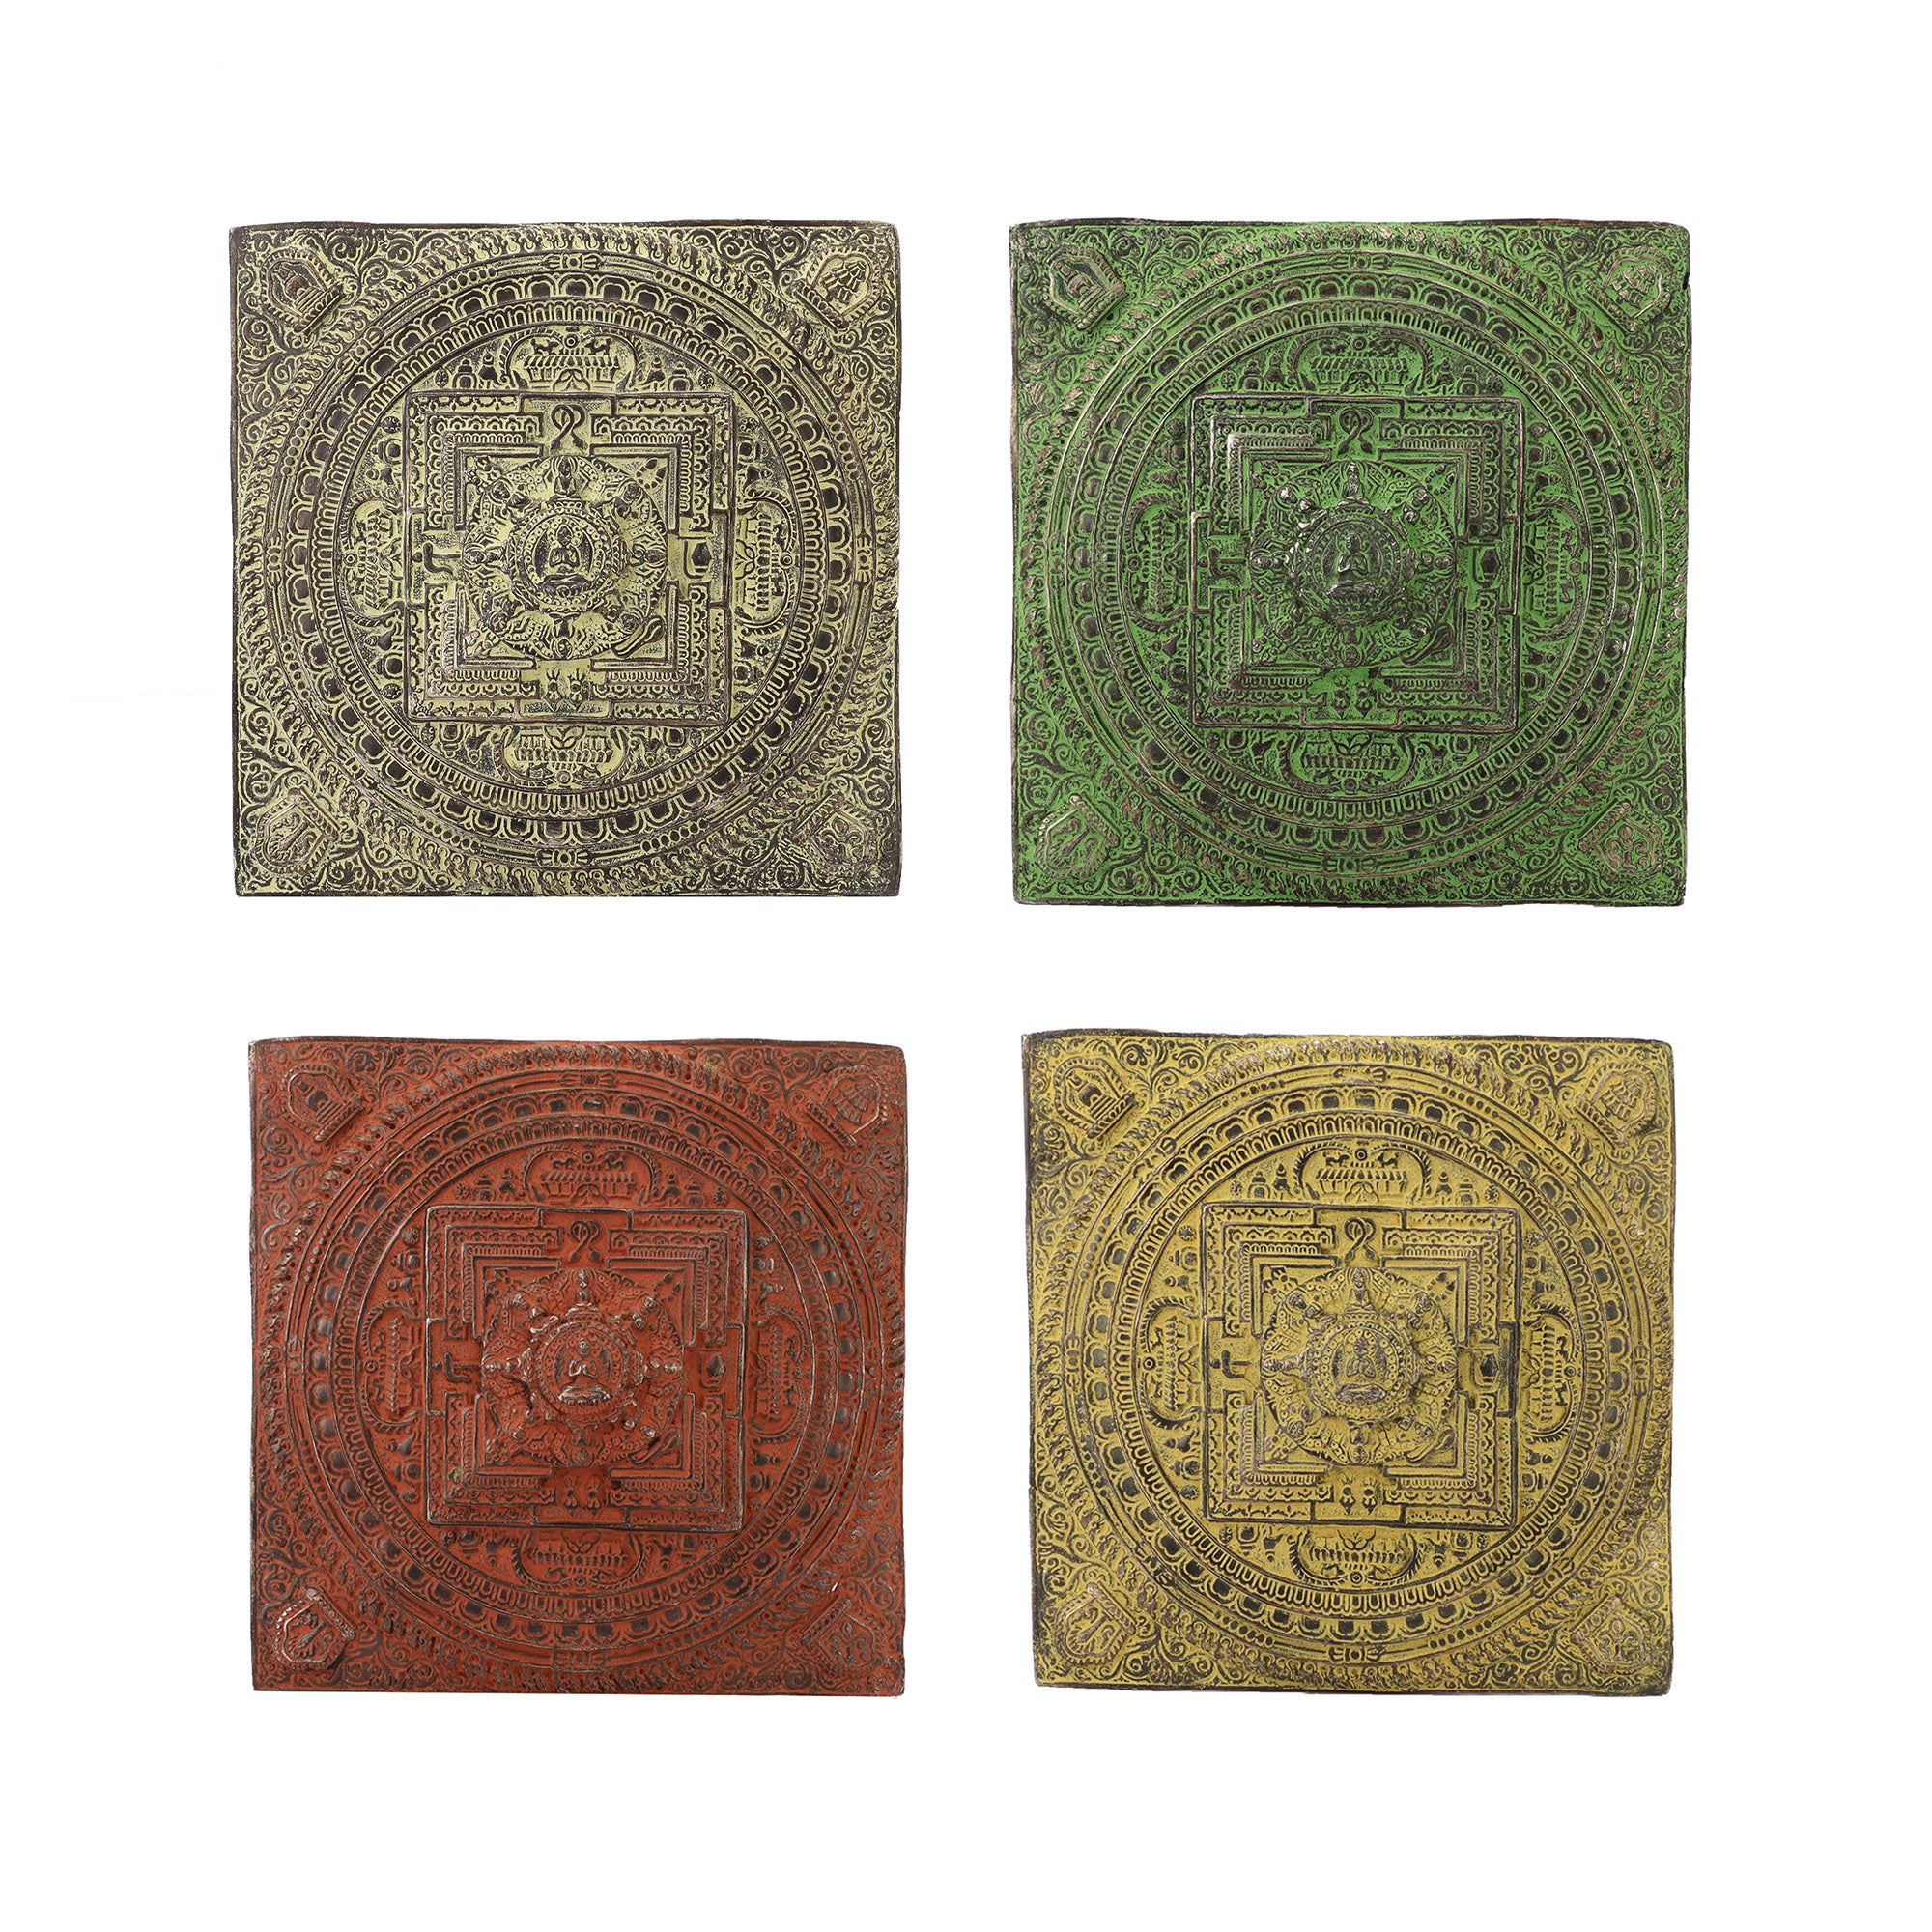 Handcarved Metal Mandala Wall Art (Single)